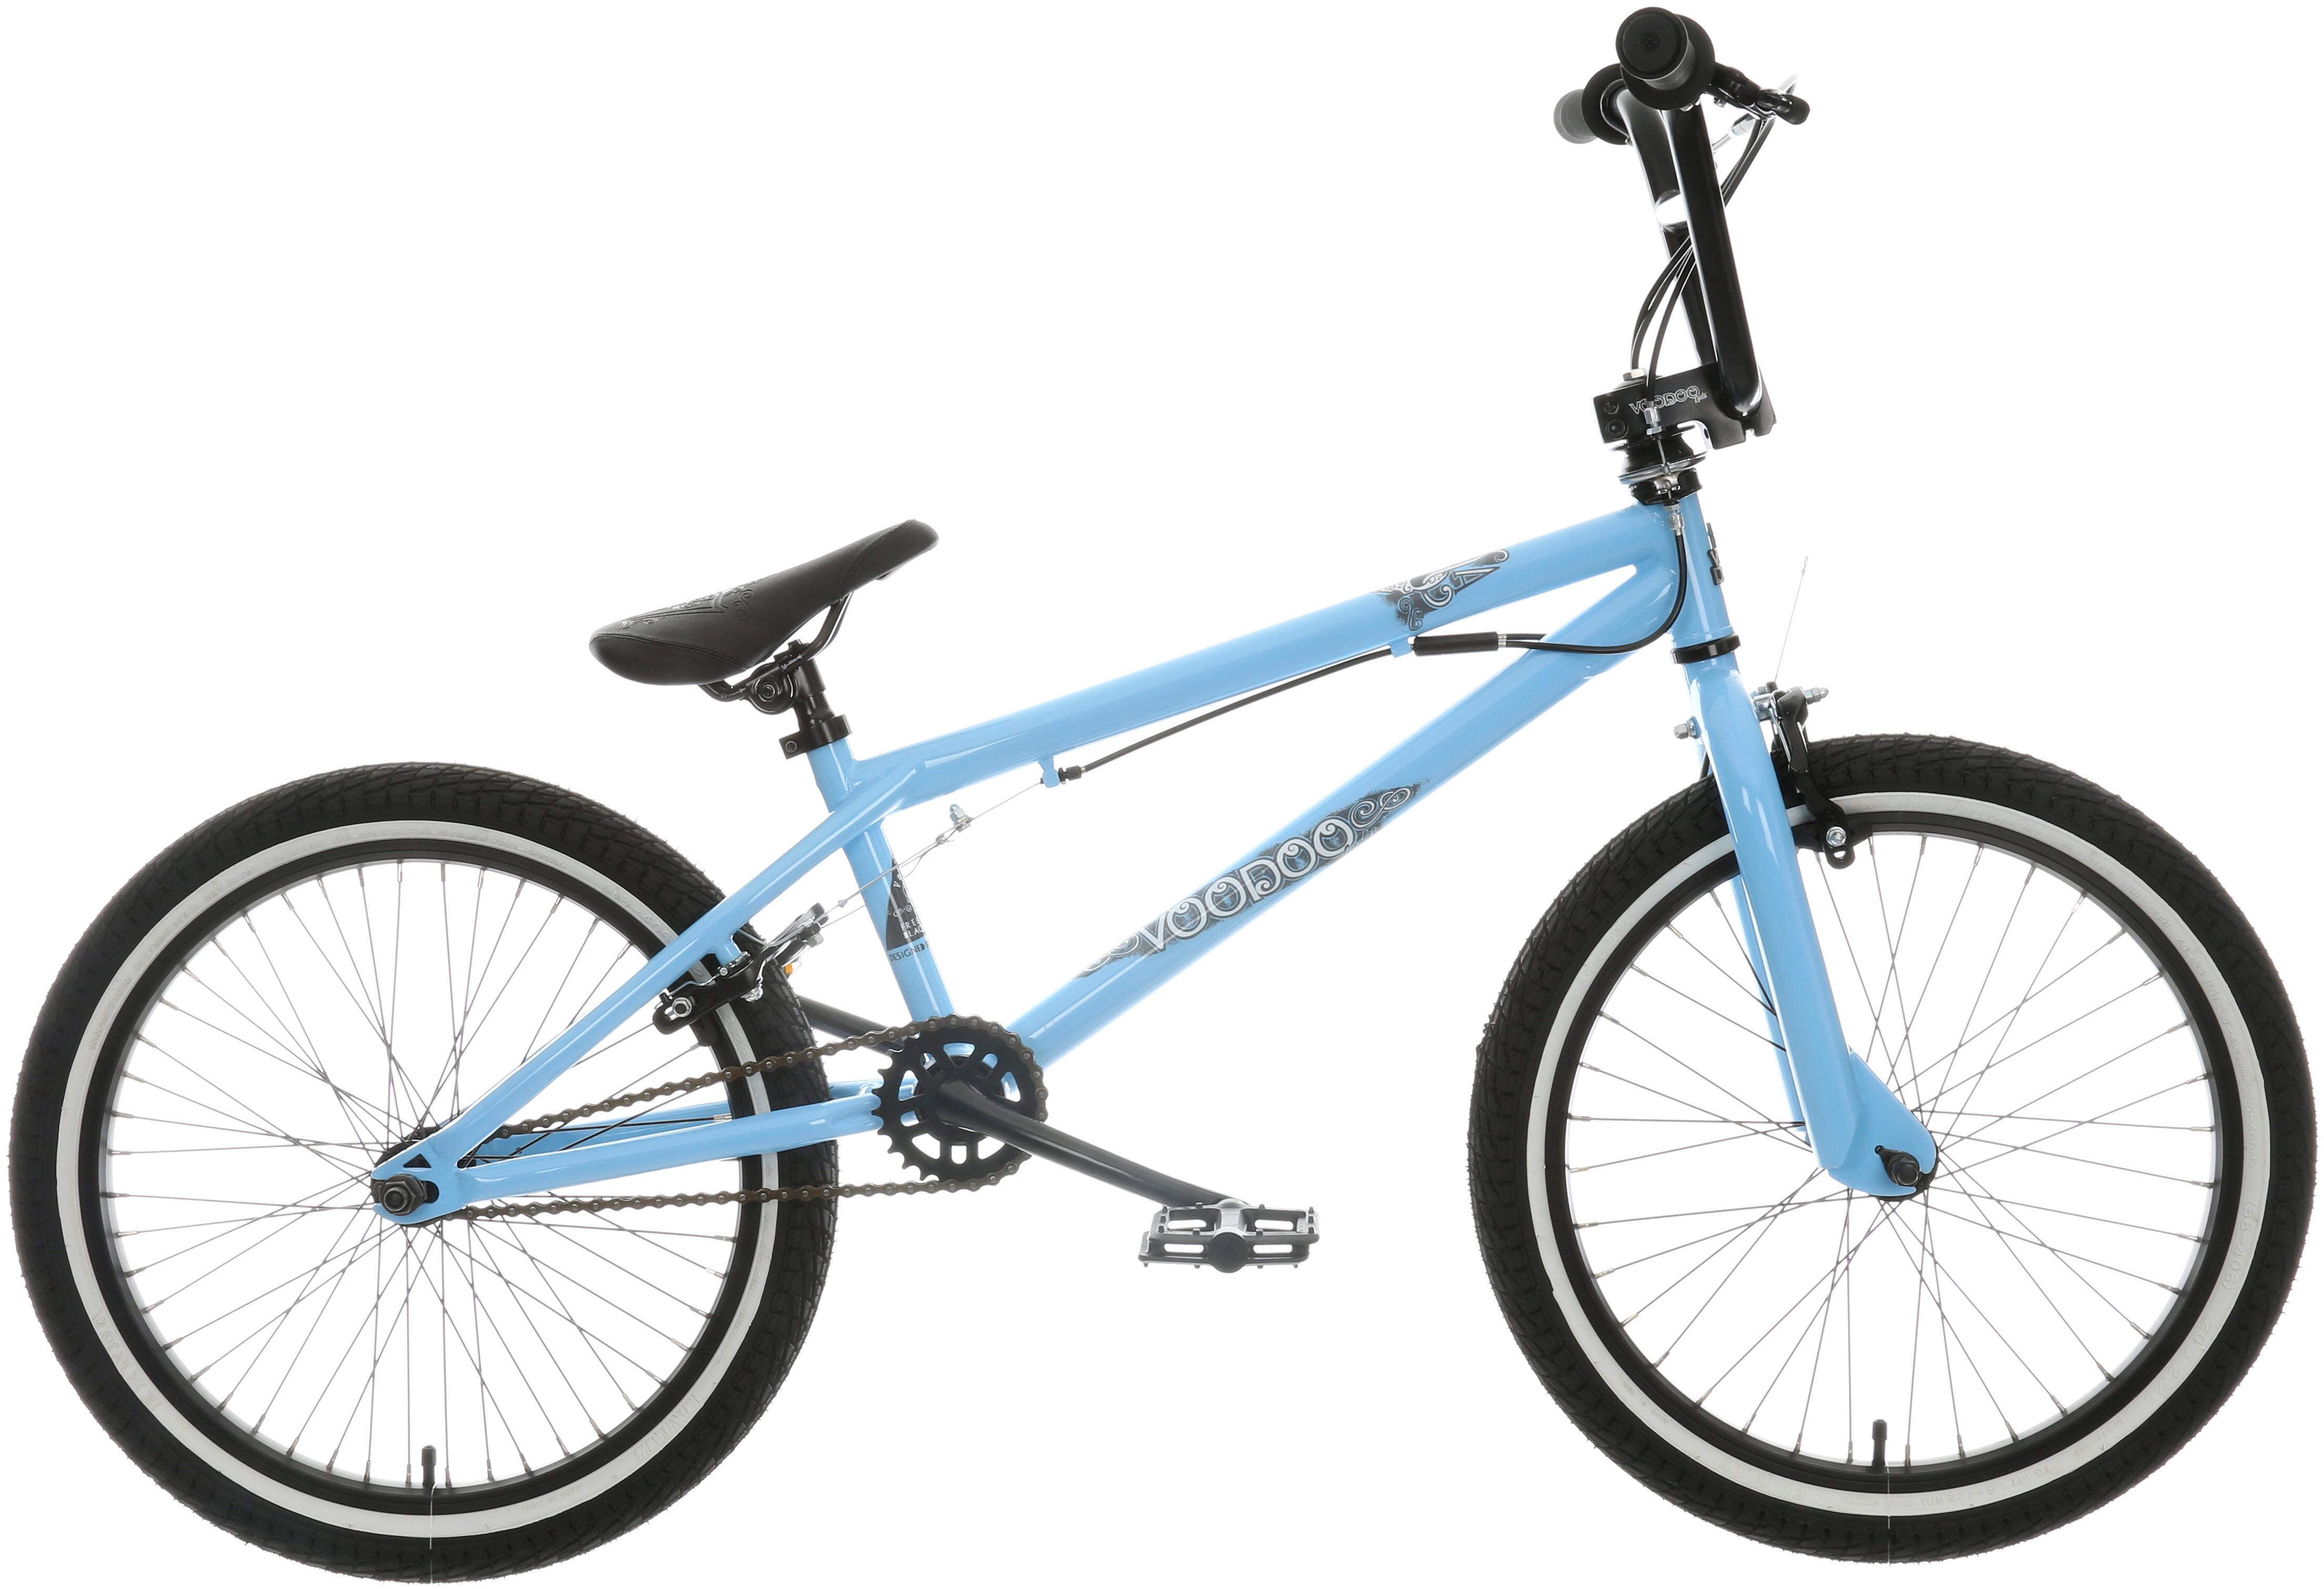 blue and white bmx bike